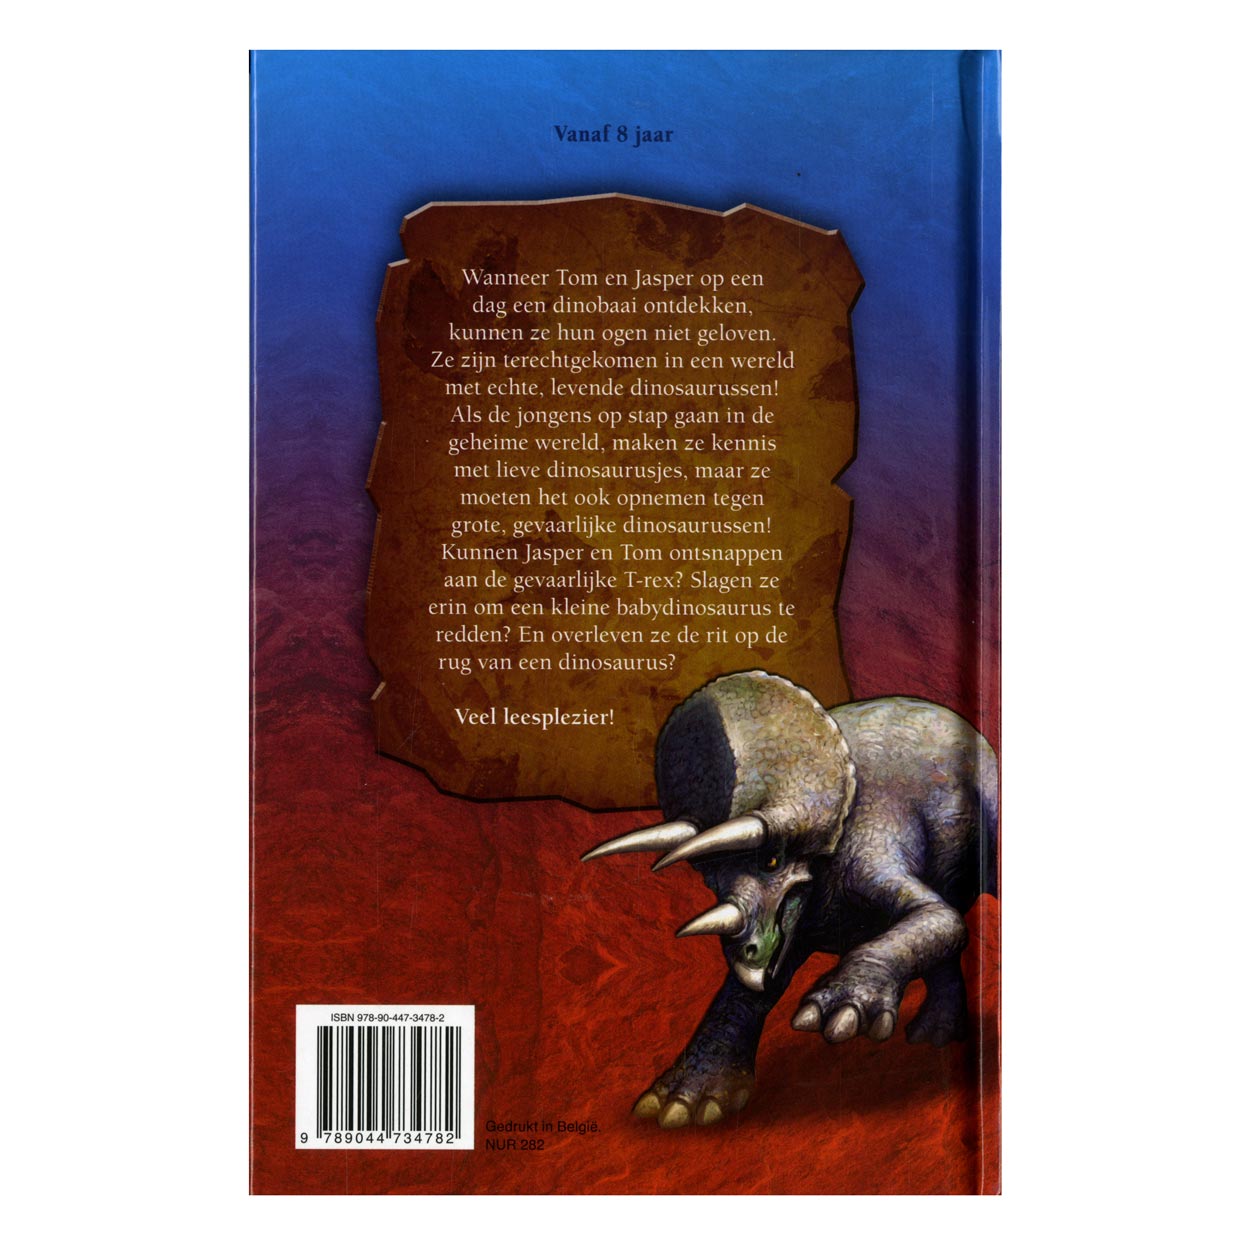 Dinobaai verhalenomnibus